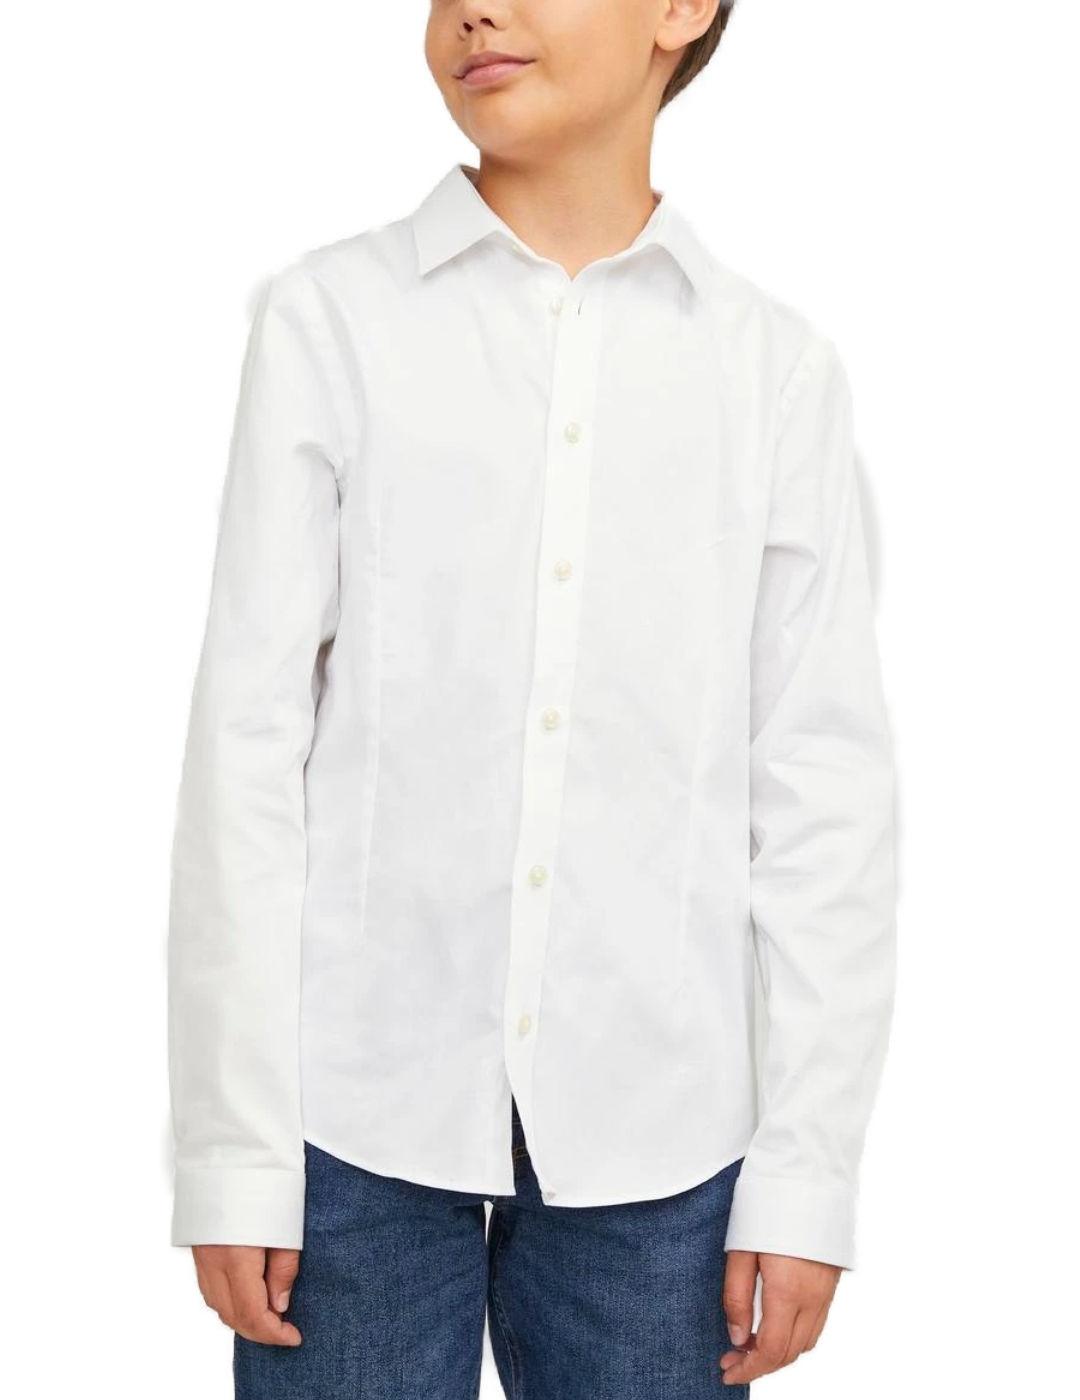 Camisa Jack&Jones Junior Parma blanca para niño